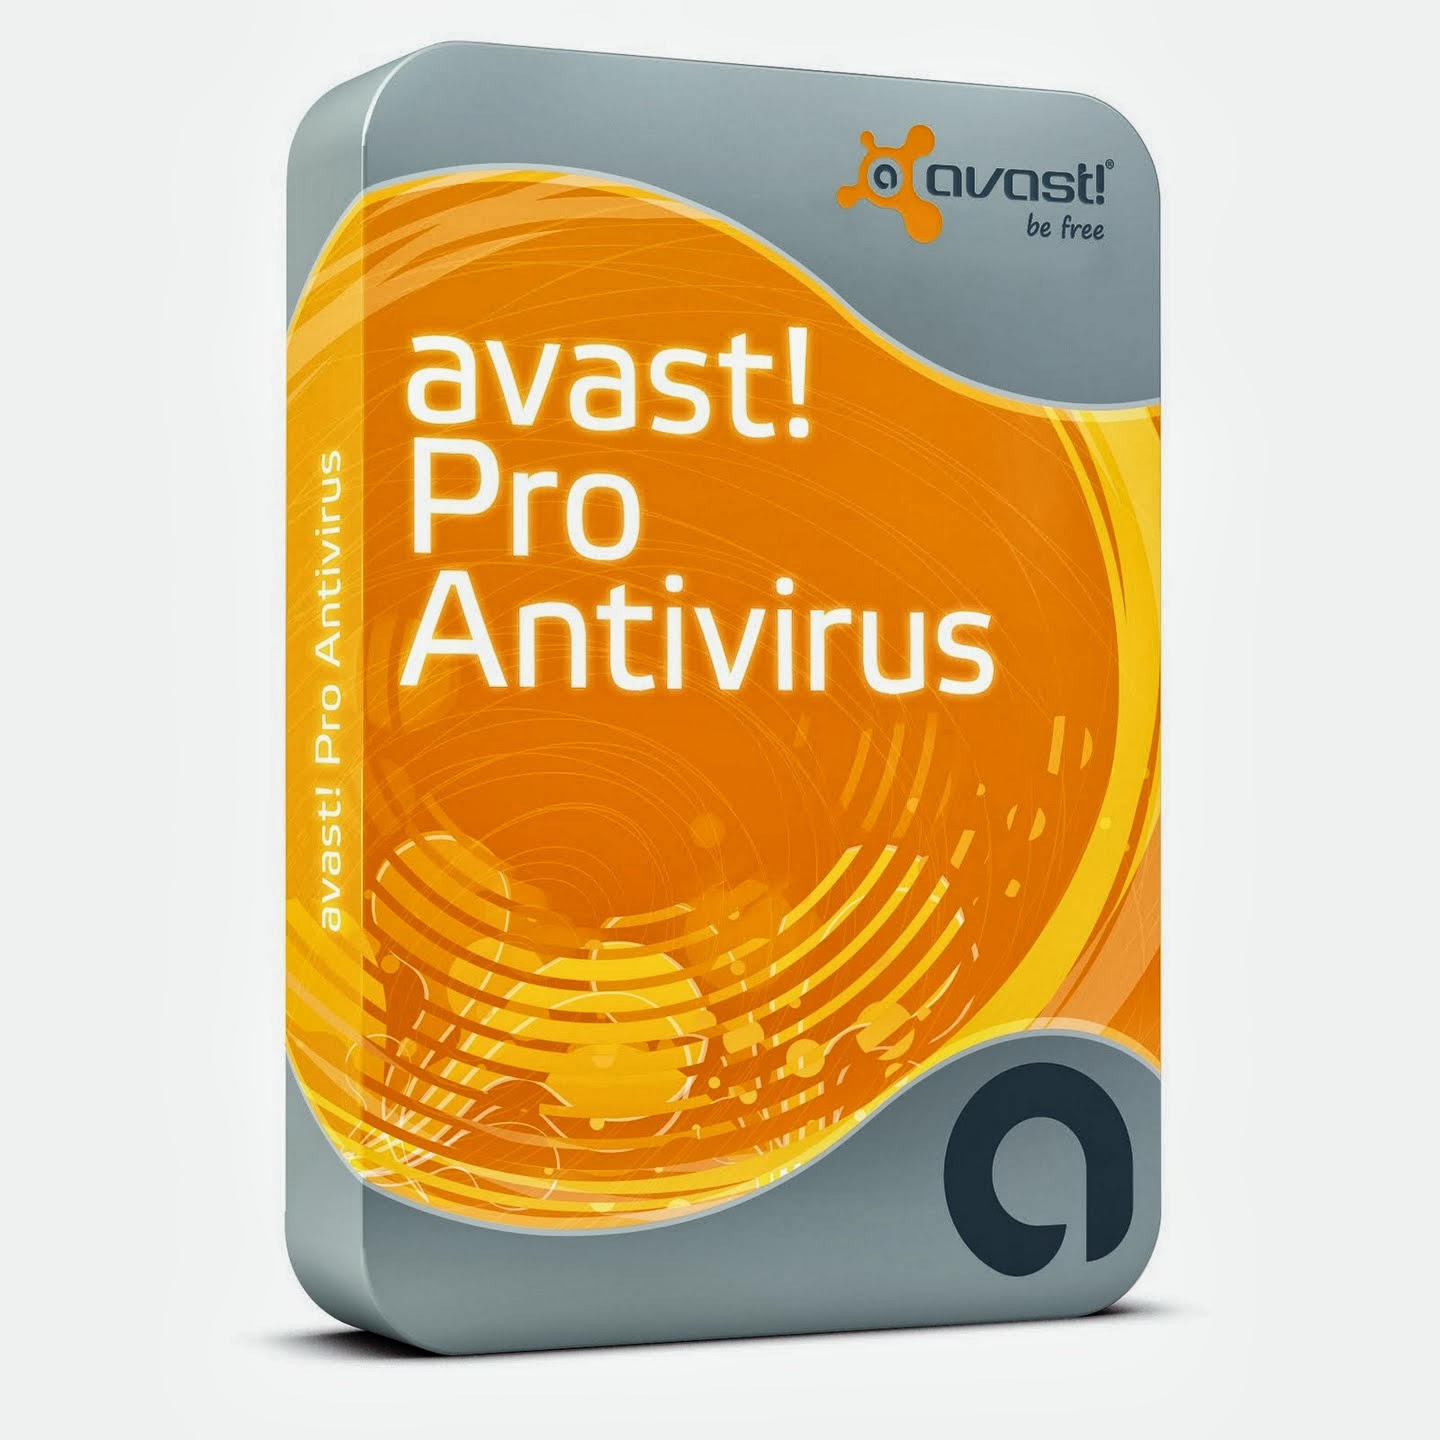 Avast pro antivirus full version 6 activation key free download